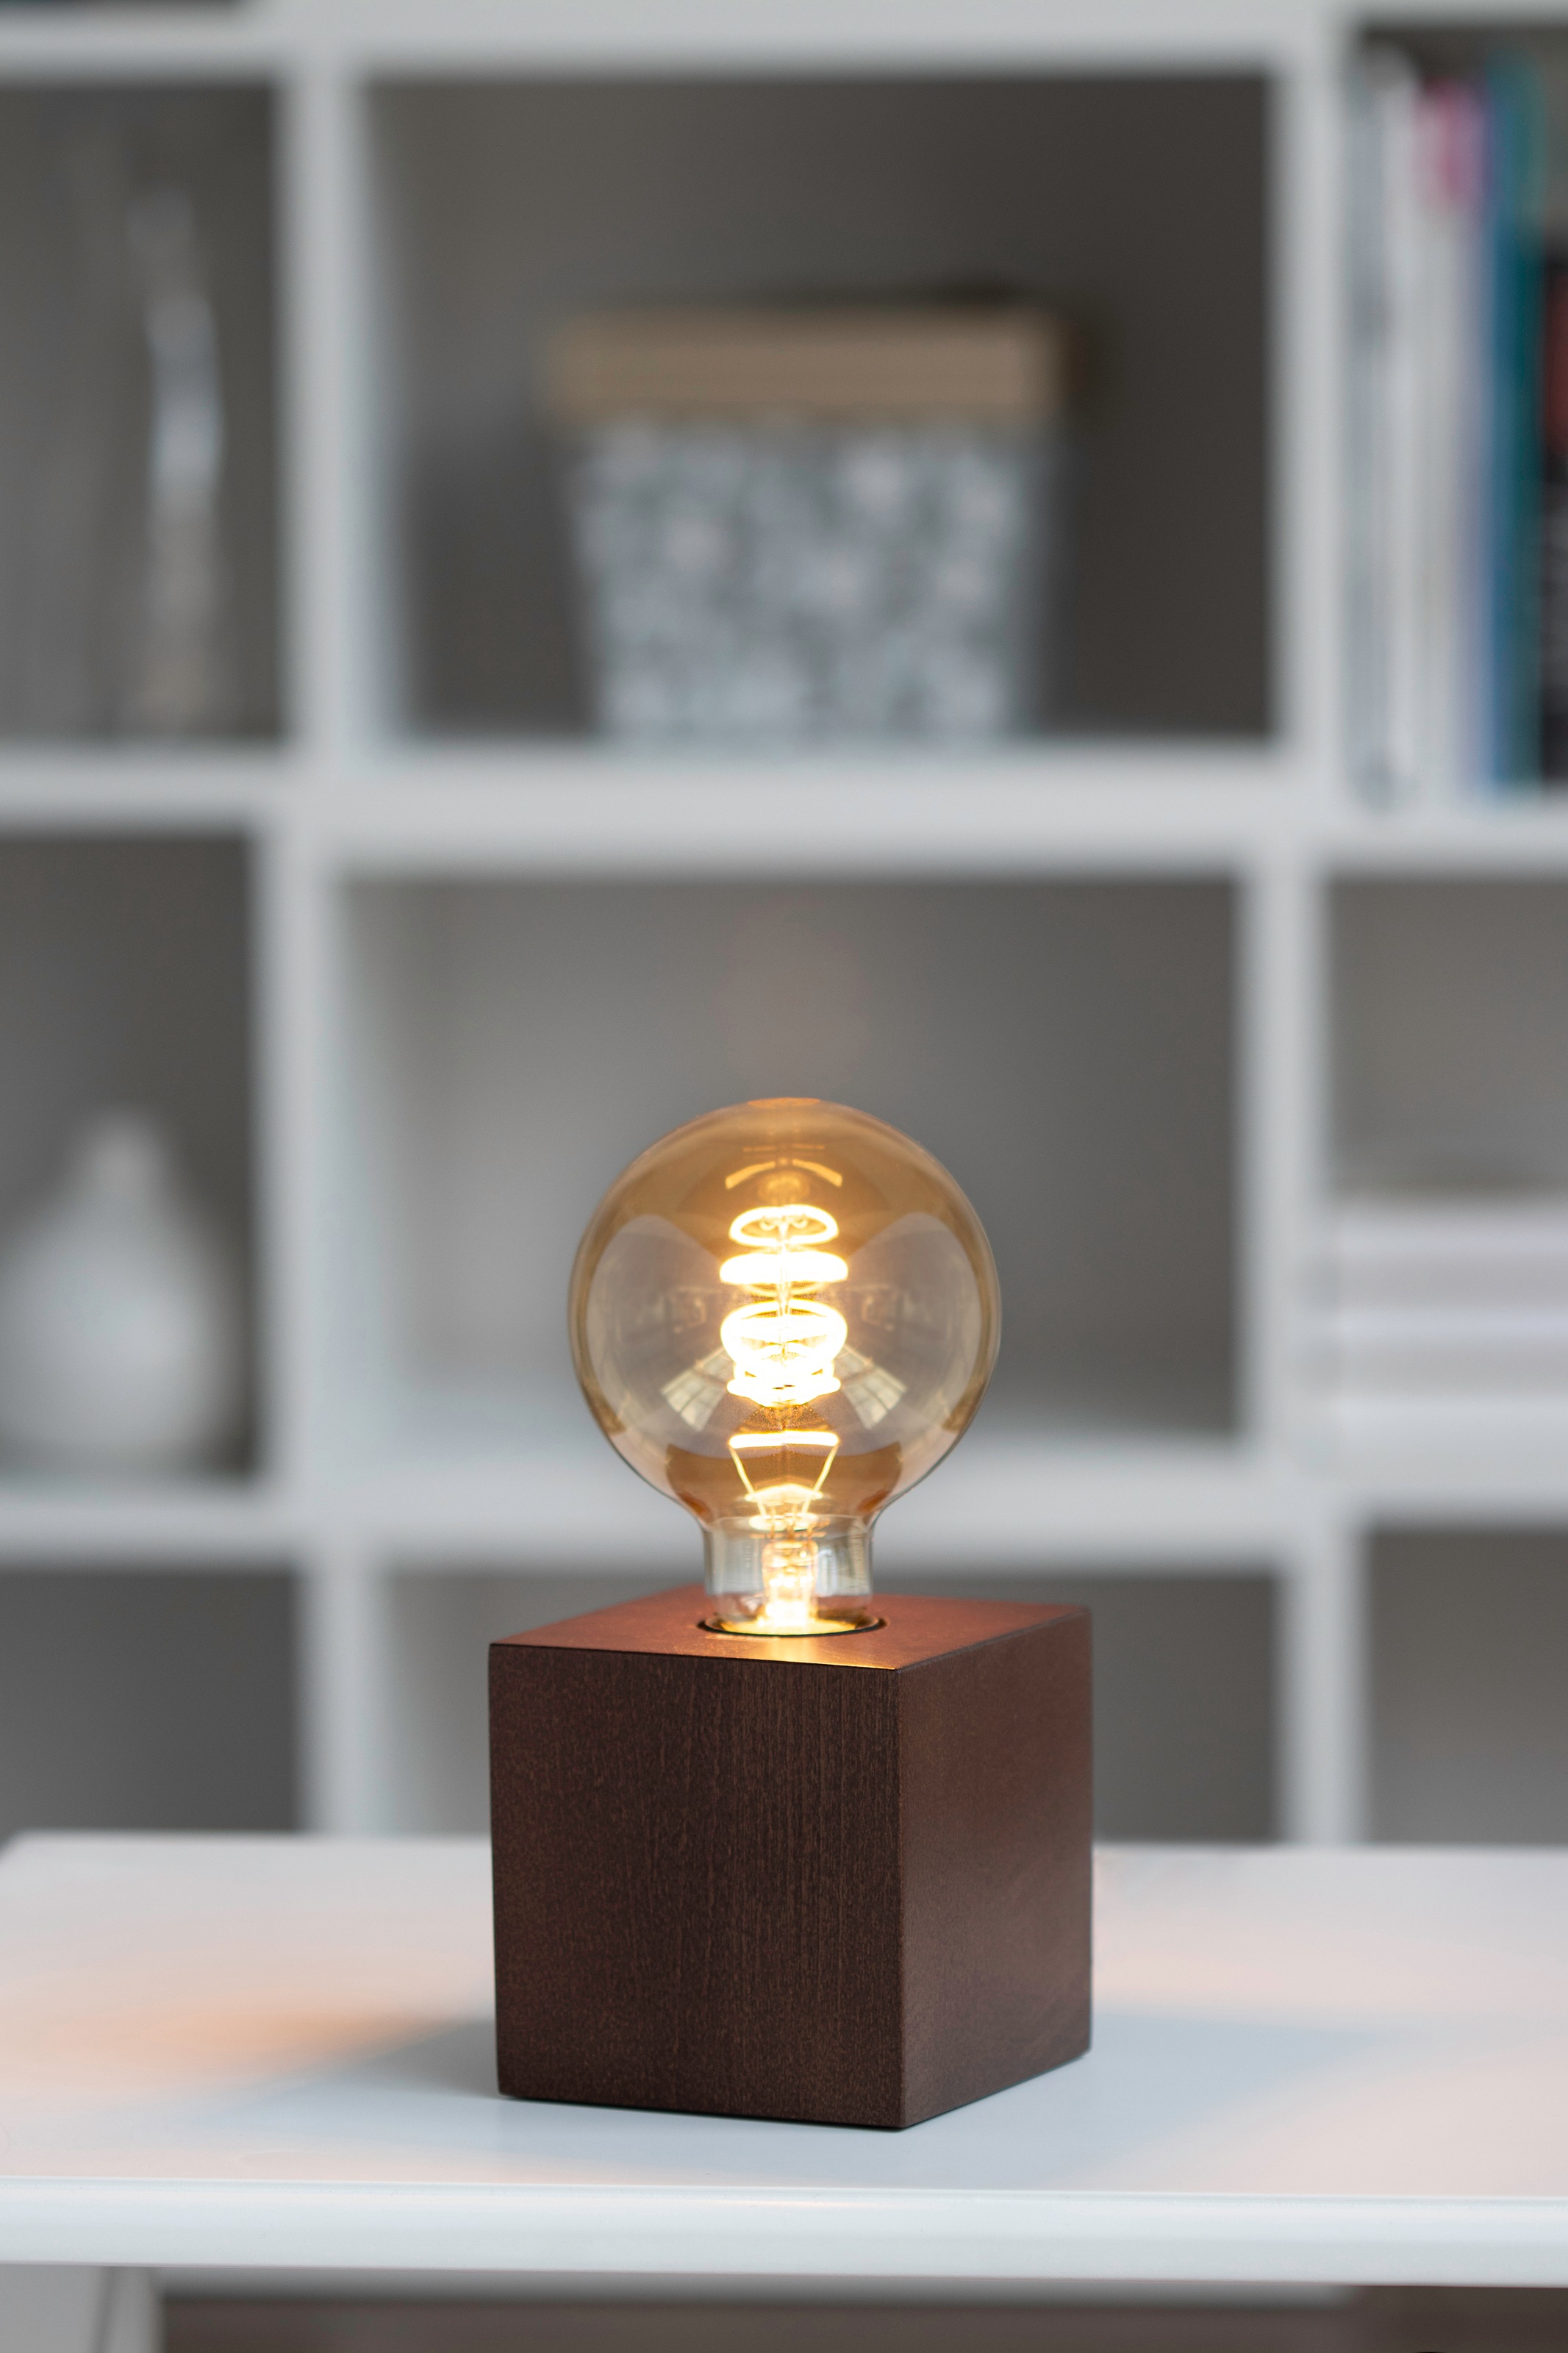 SPOT Light LED-Filament »LED-Leuchtmittel«, E27, 3 St., Extra-Warmweiß, ausgezeichnete Lichteffizienz, extra-warmweiß, Vintage-Leuchtmittel